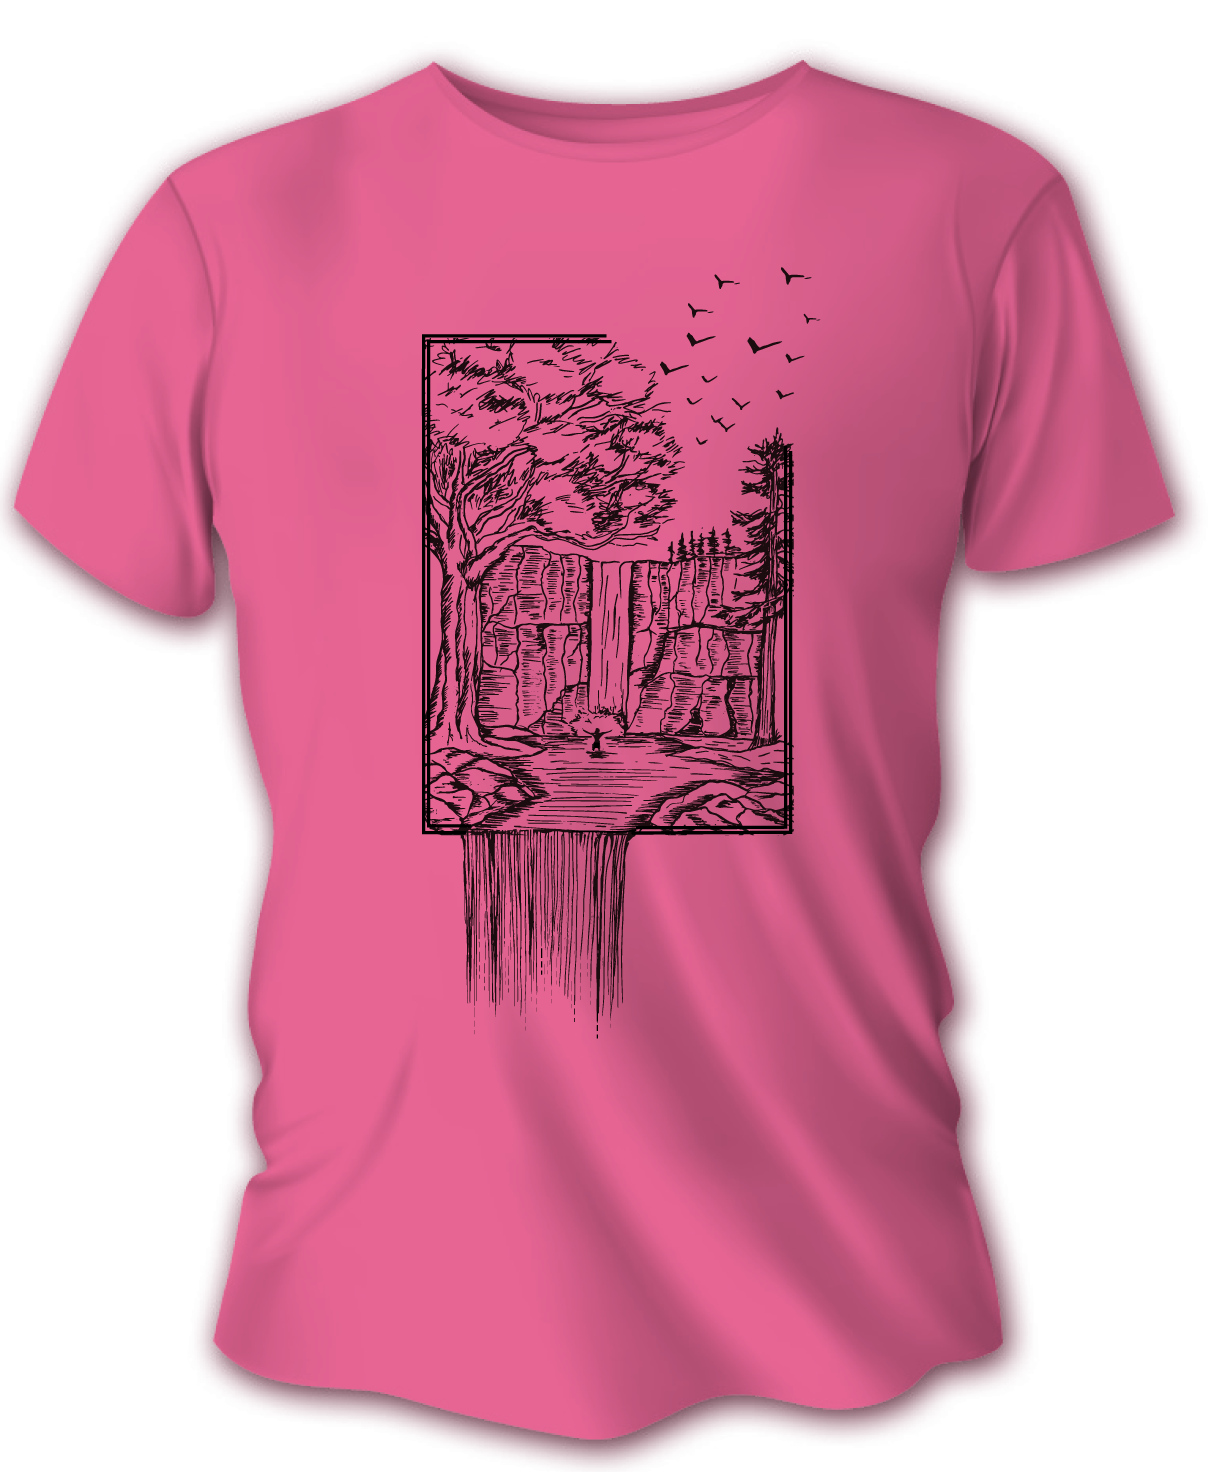 Dámske poľovnícke tričko TETRAO vodopád - ružové   XS